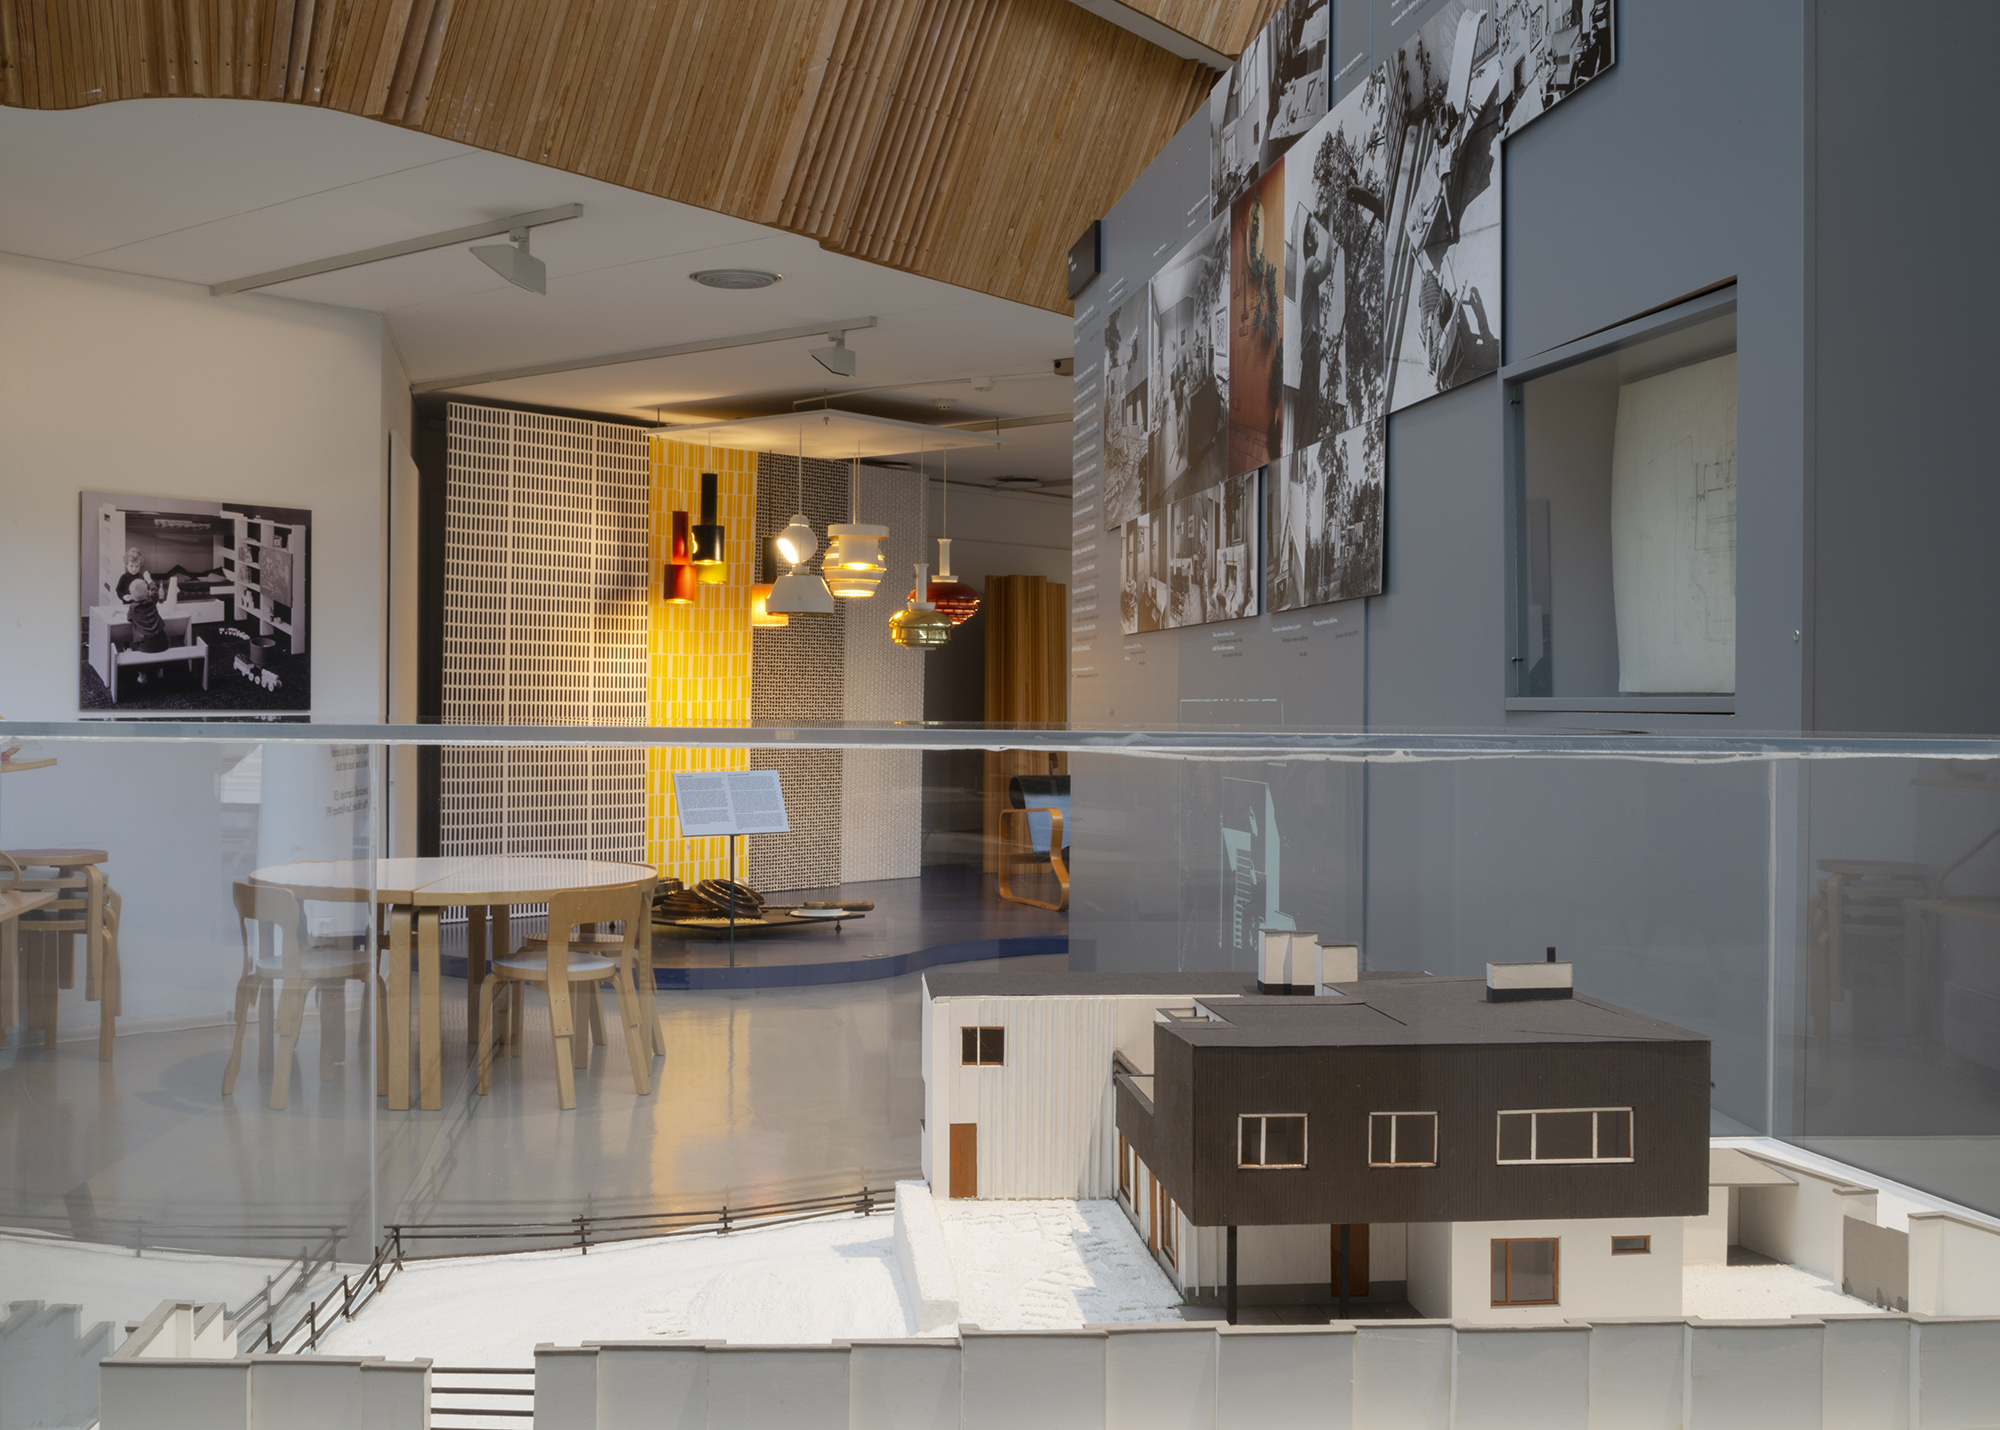 Photo of the Alvar Aalto Museum´s permanent exhibition by Maija Holma © Alvar Aalto Foundation.